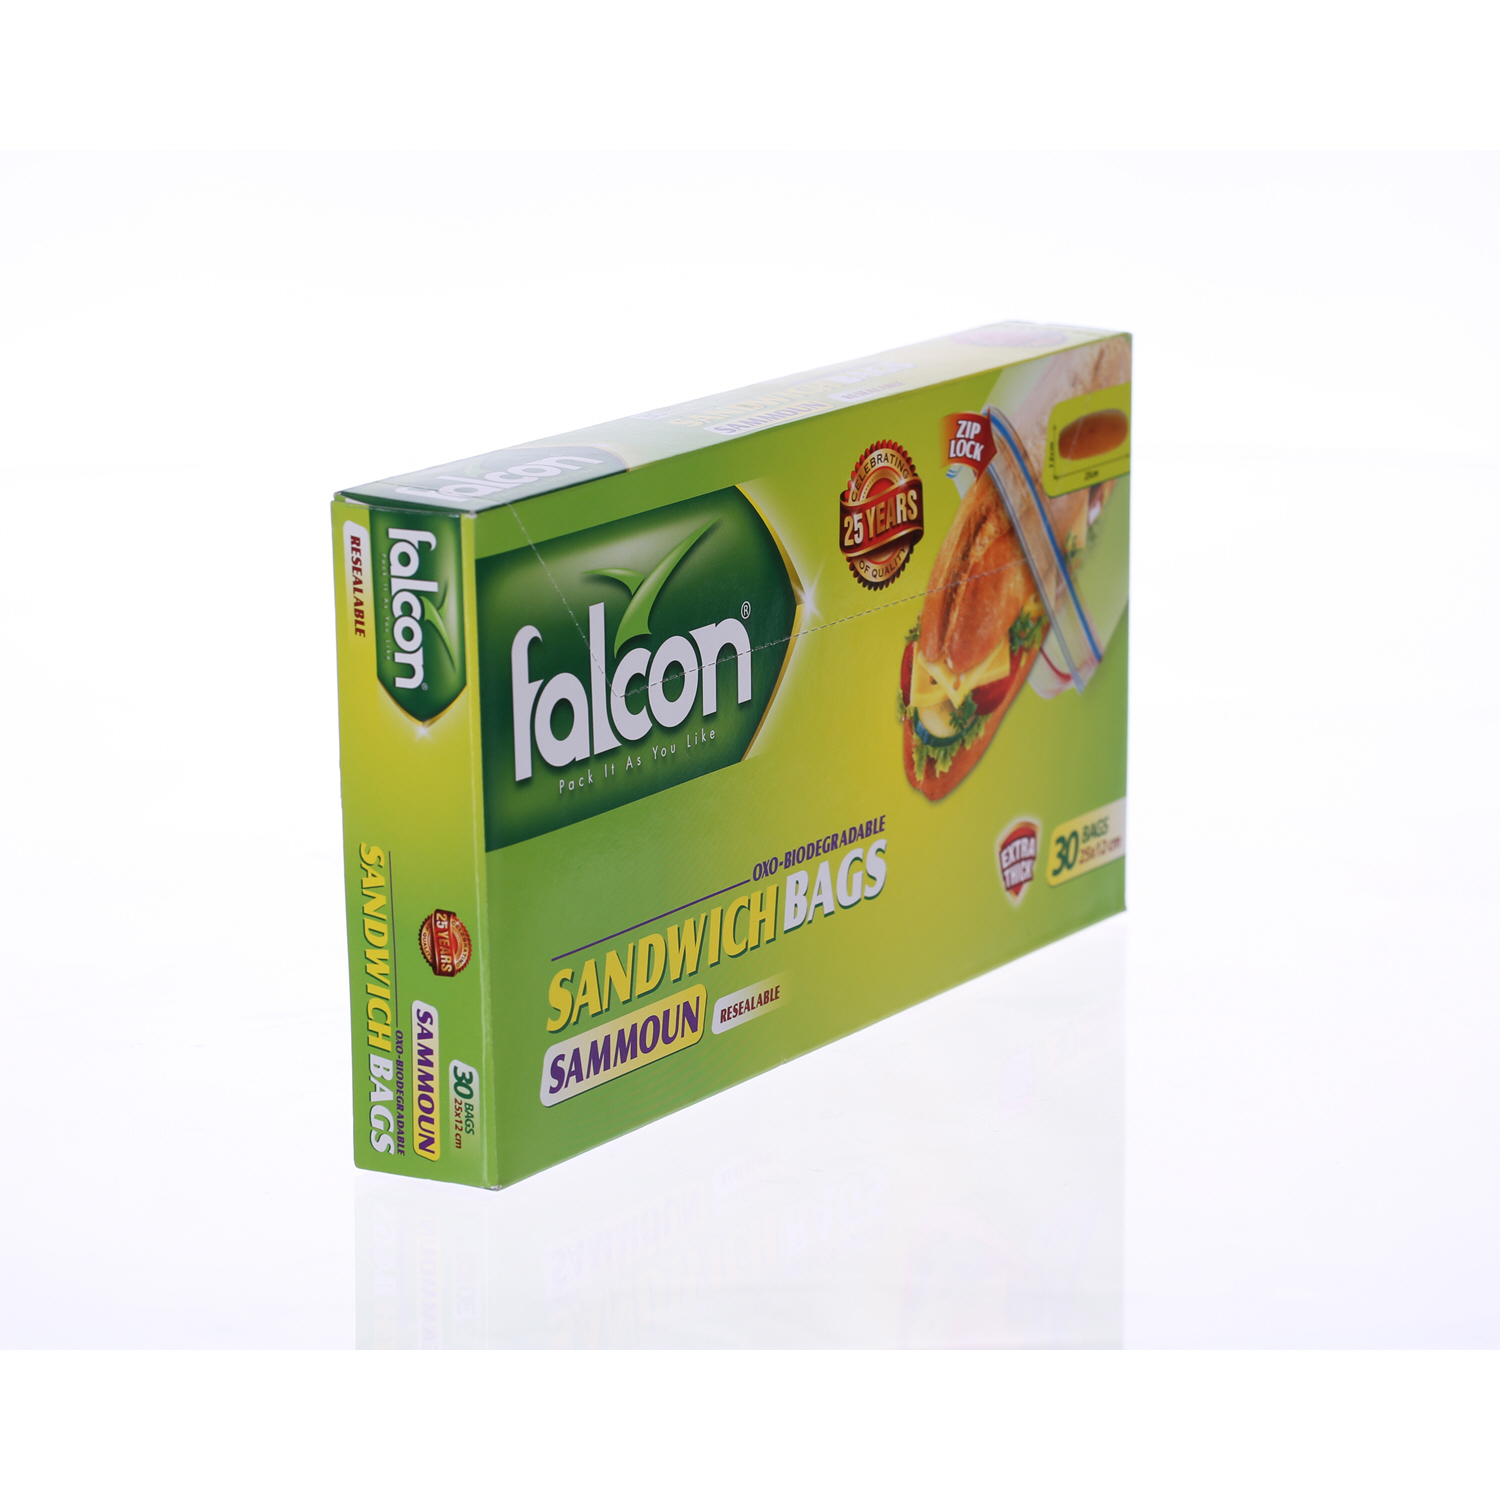 Falcon Samoon Sandwich Bag Large 30 Pack